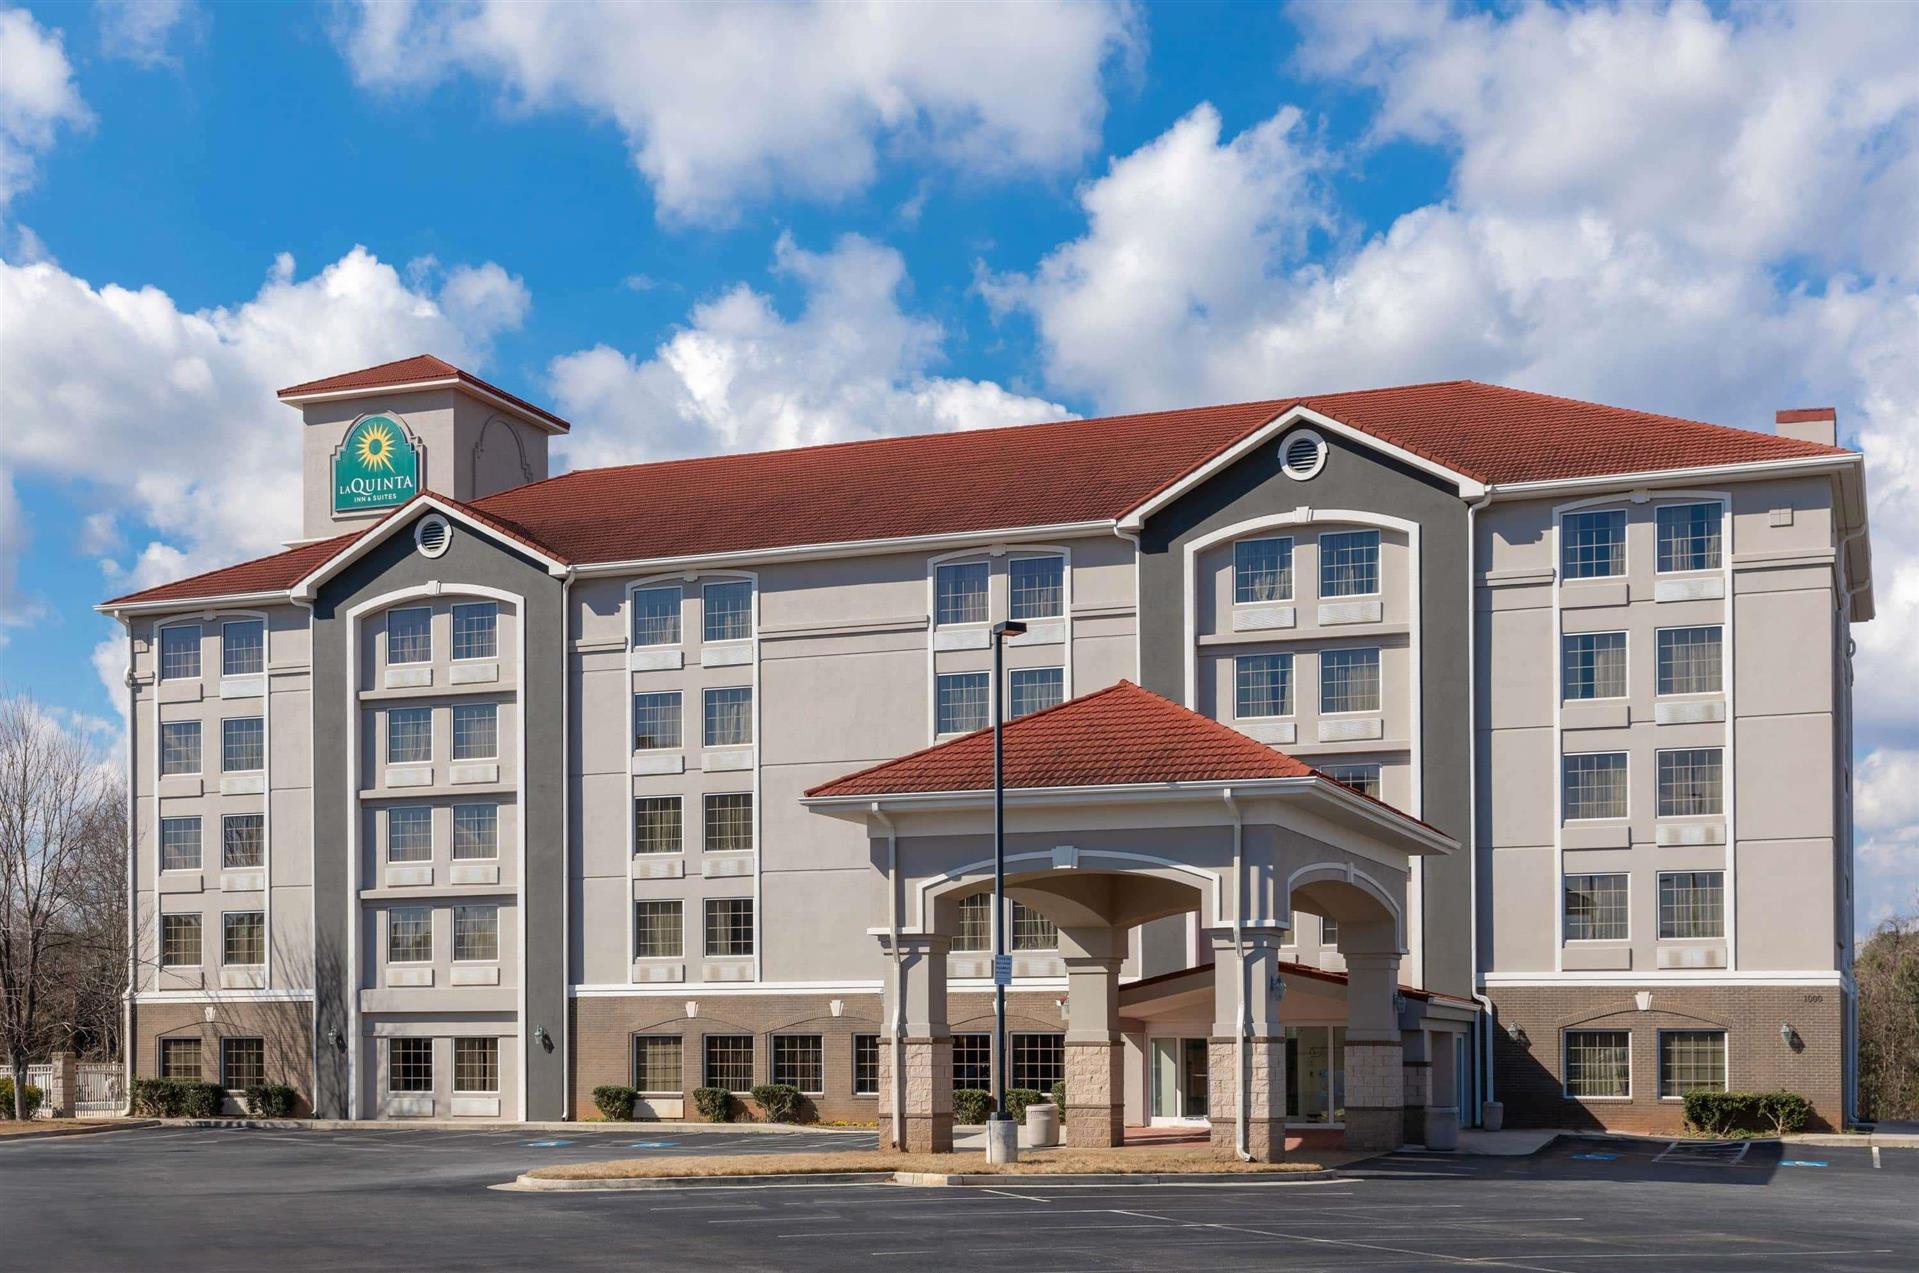 La Quinta Inn & Suites by Wyndham Atlanta Douglasville in Douglasville, GA